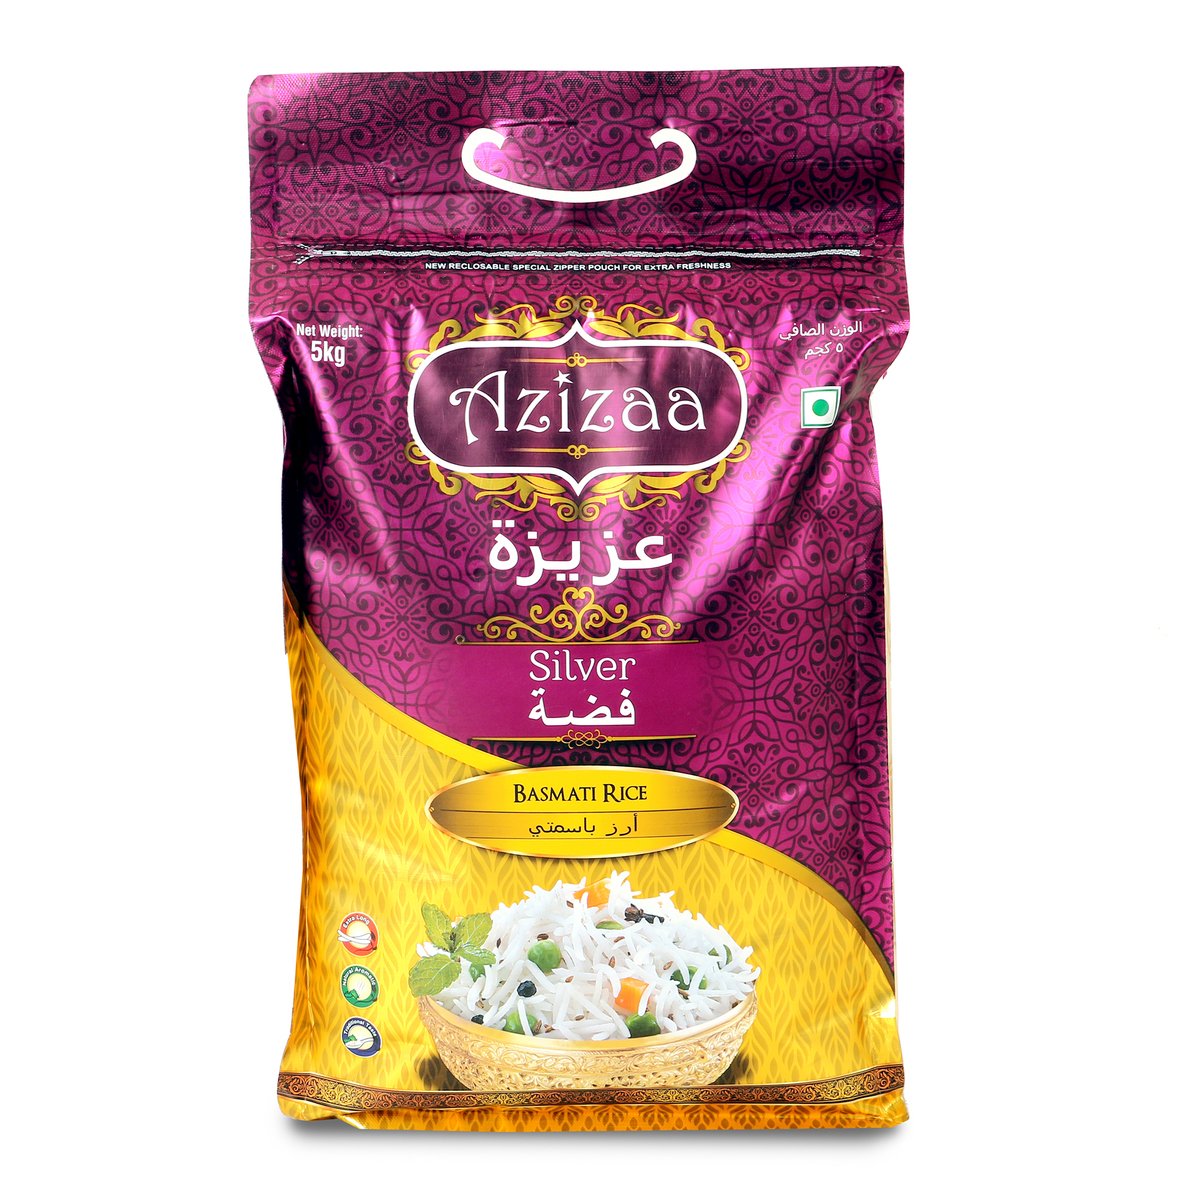 Azizaa Silver Basmati Rice 5kg